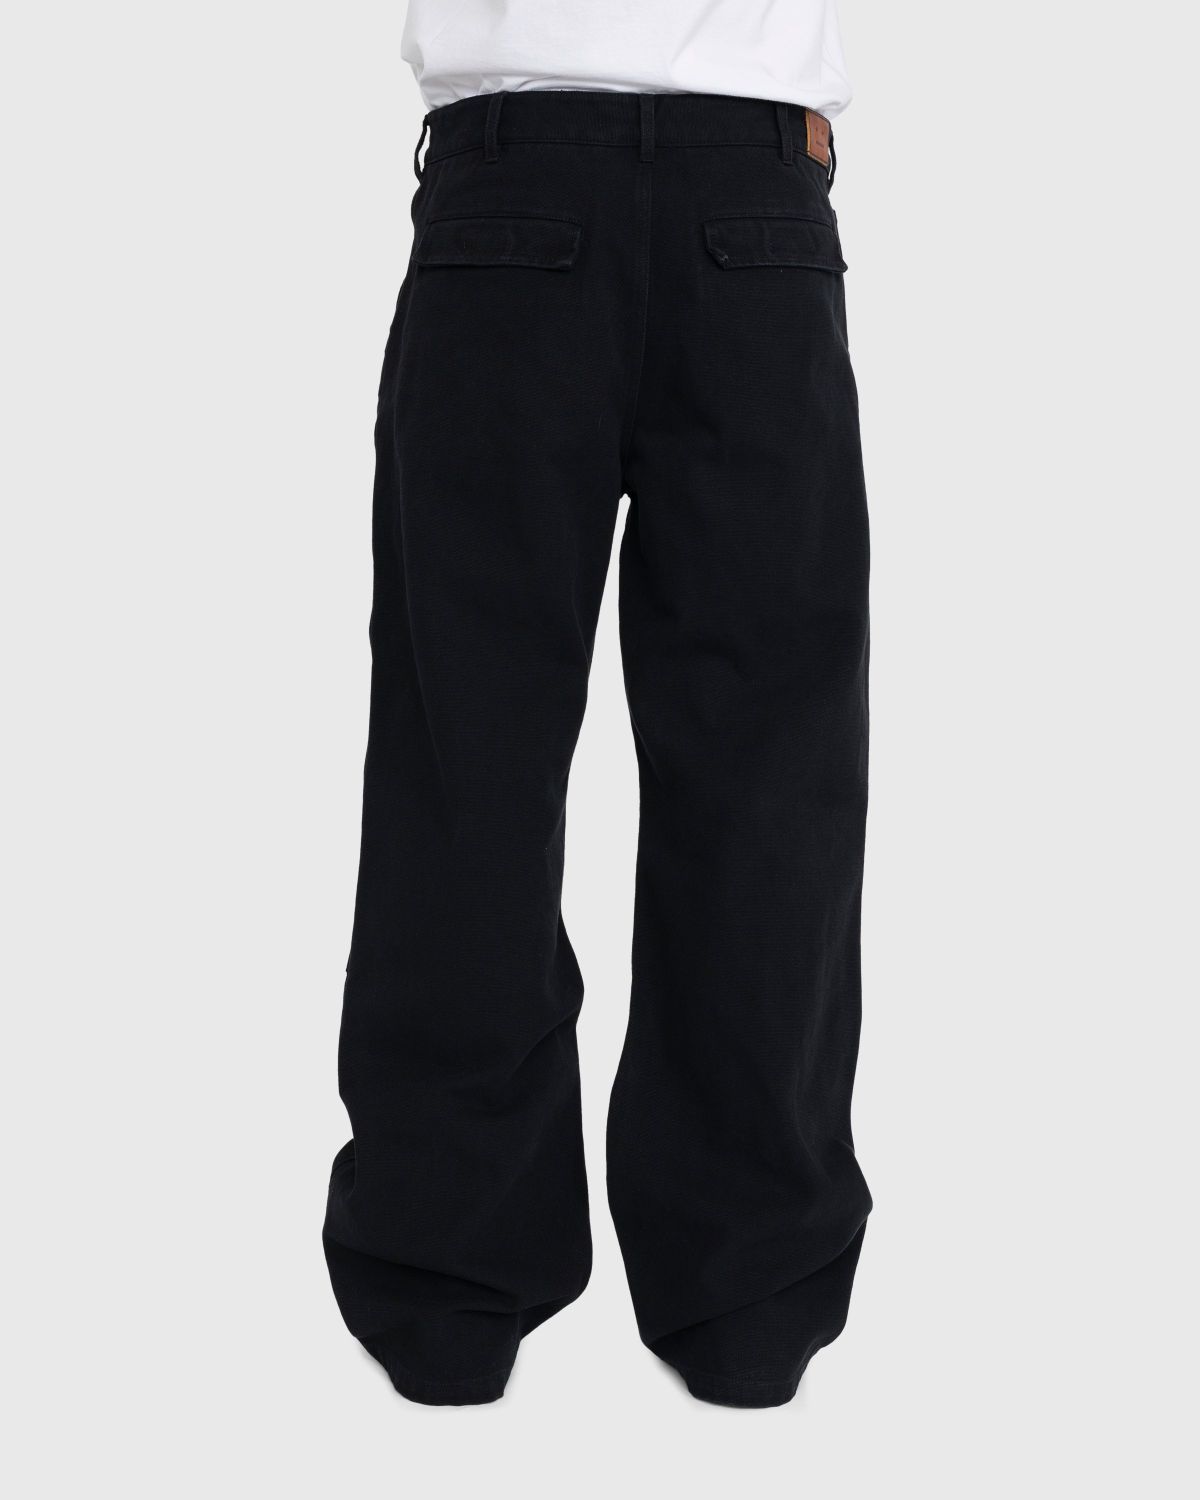 Acne Studios – Cotton Workwear Trousers Black - Pants - Black - Image 4